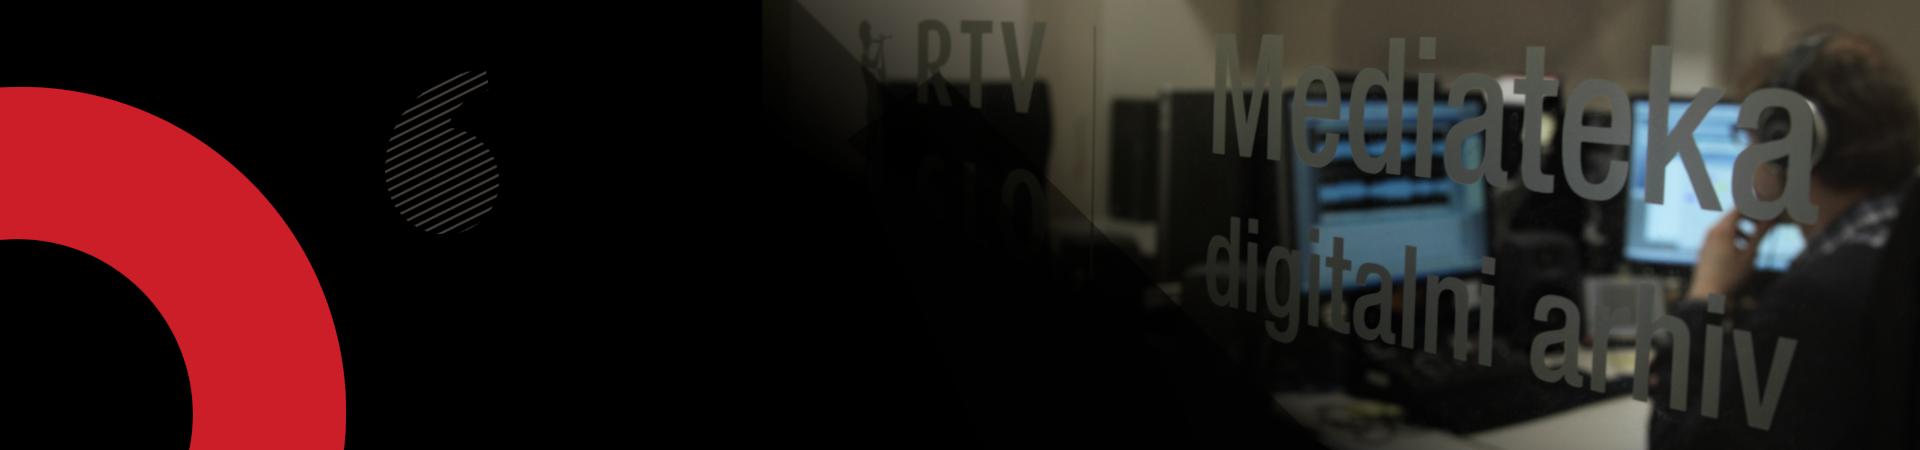 Archive Evolution <br>at RTV Slovenia